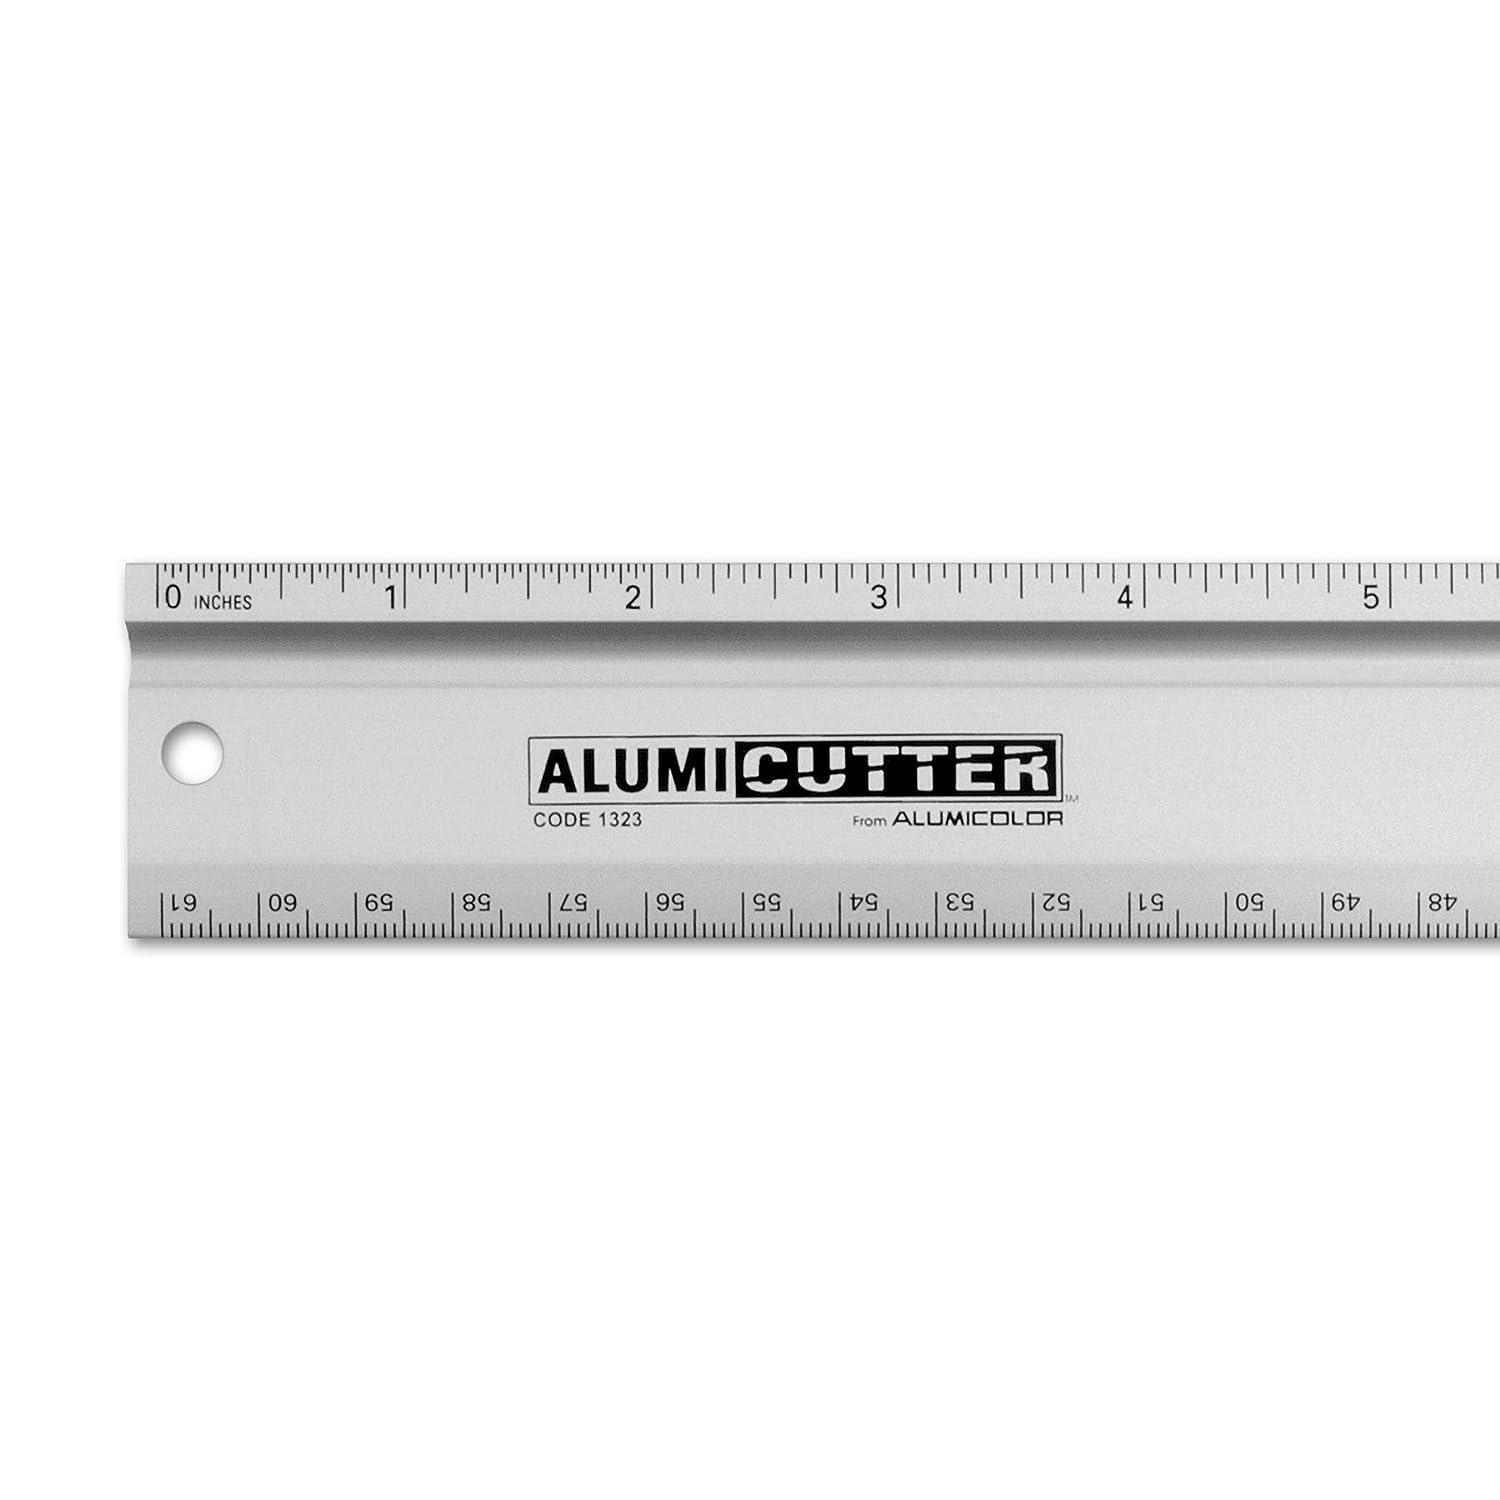 Alumicolor alumicolor aluminum straight edge with center finding